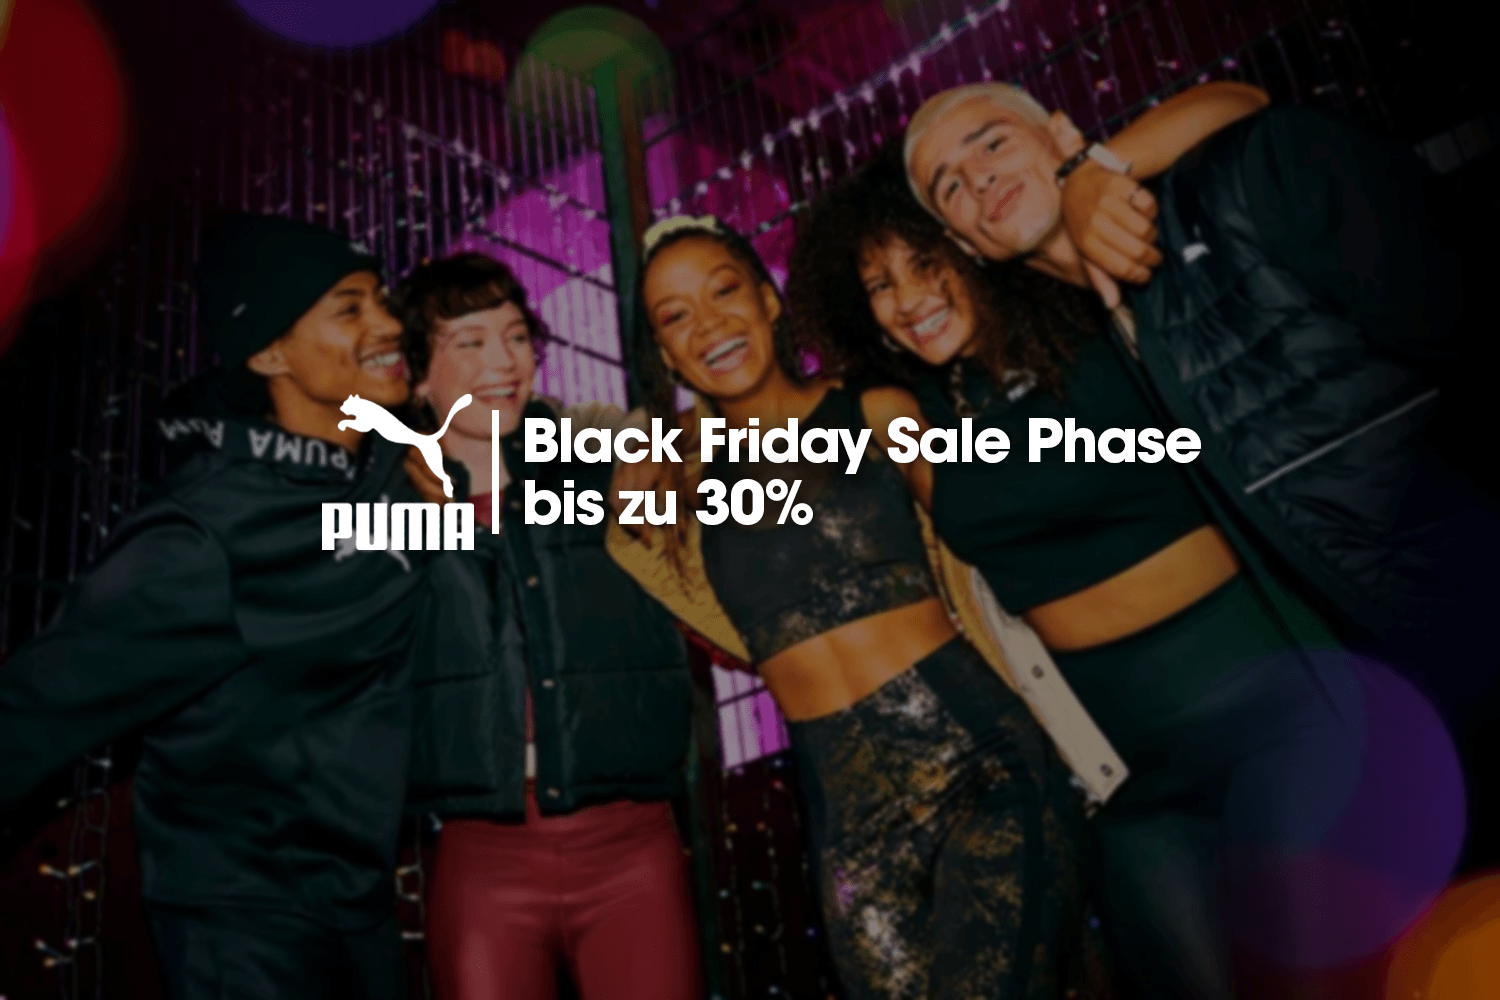 PUMA's Black Friday Sale Phase Begins